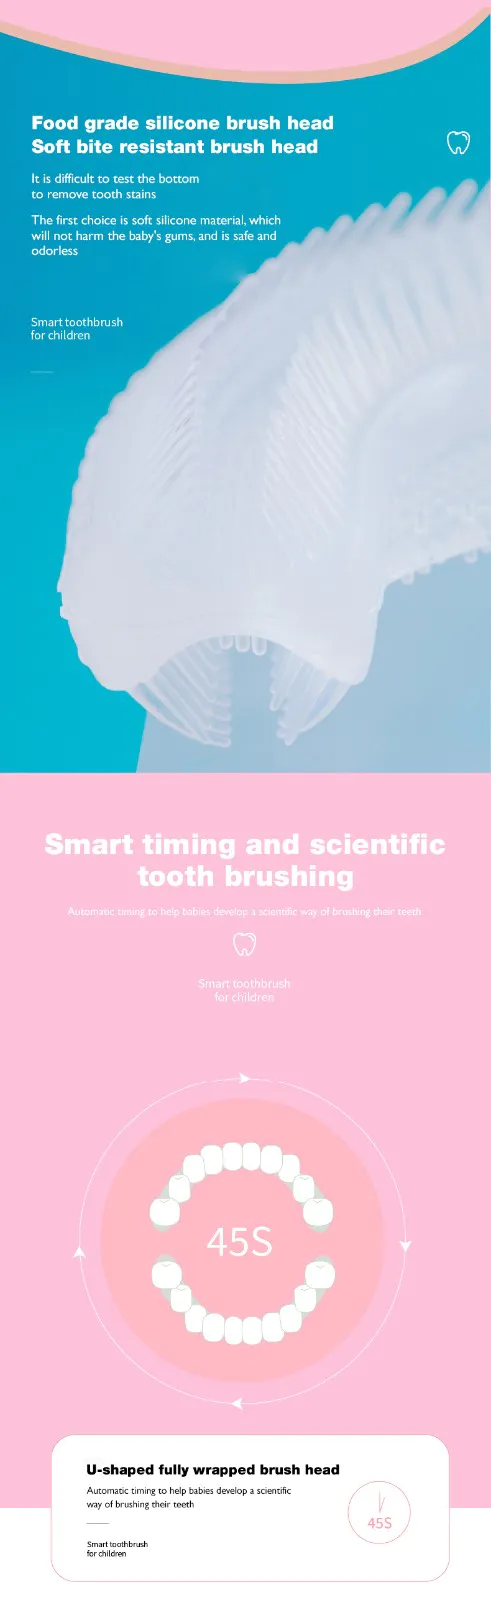 Custom automatic toothbrush company for teeth